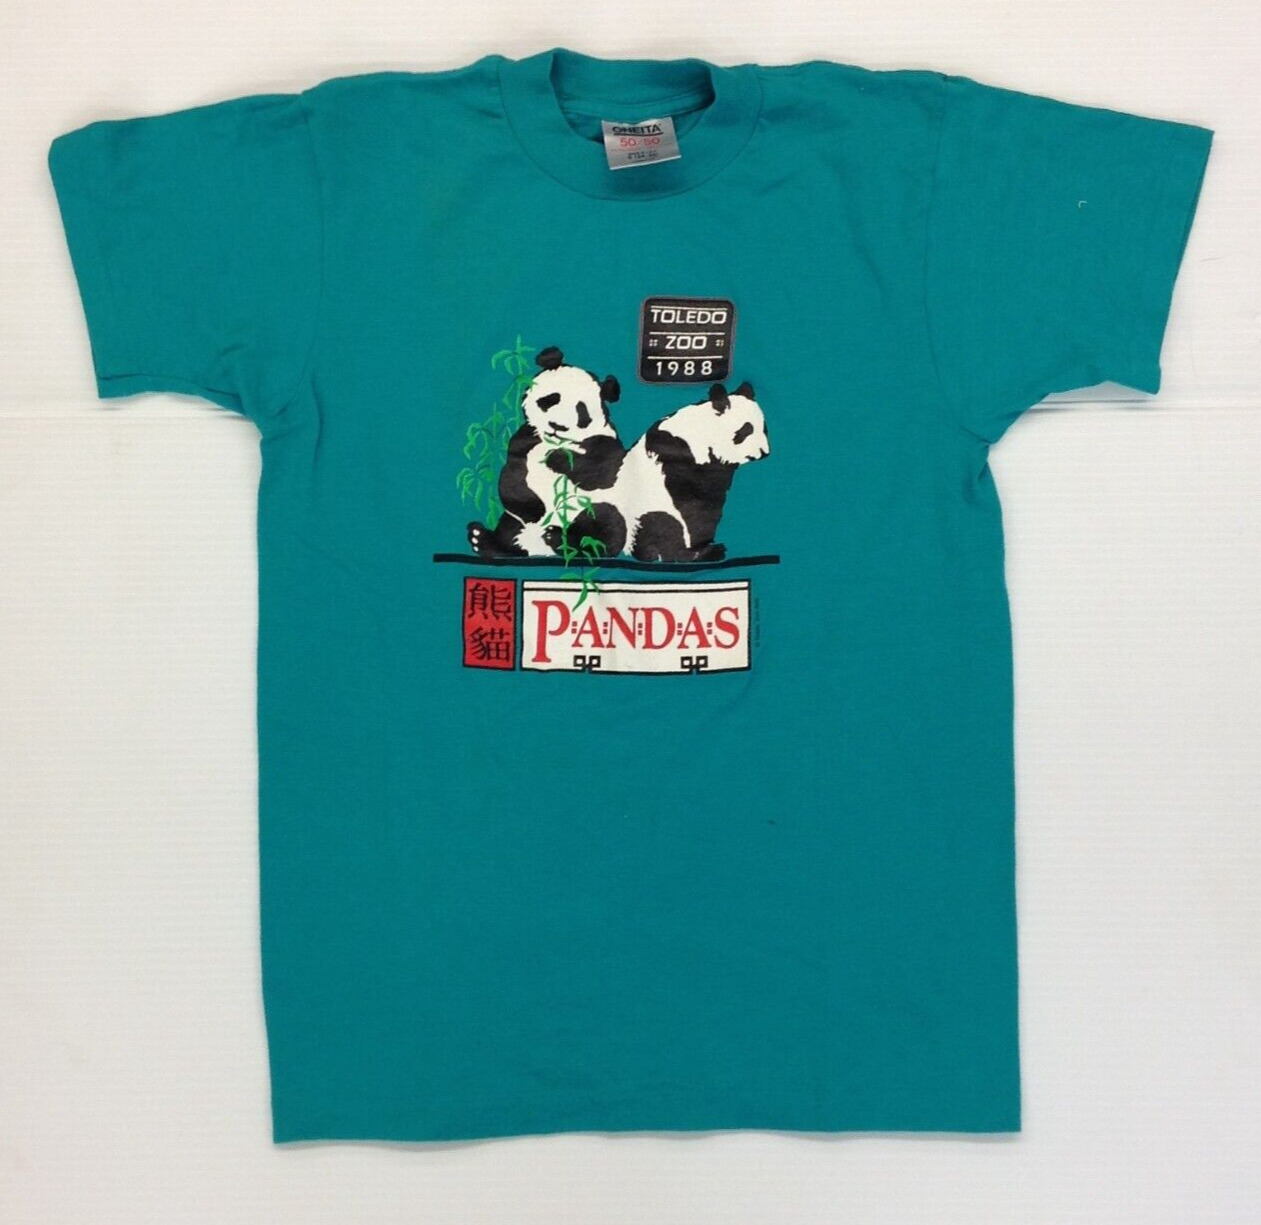 Vintage 1988 Souvenir Toledo Zoo Souvenir T-Shirt Pandas Aqua Green Small 36-46